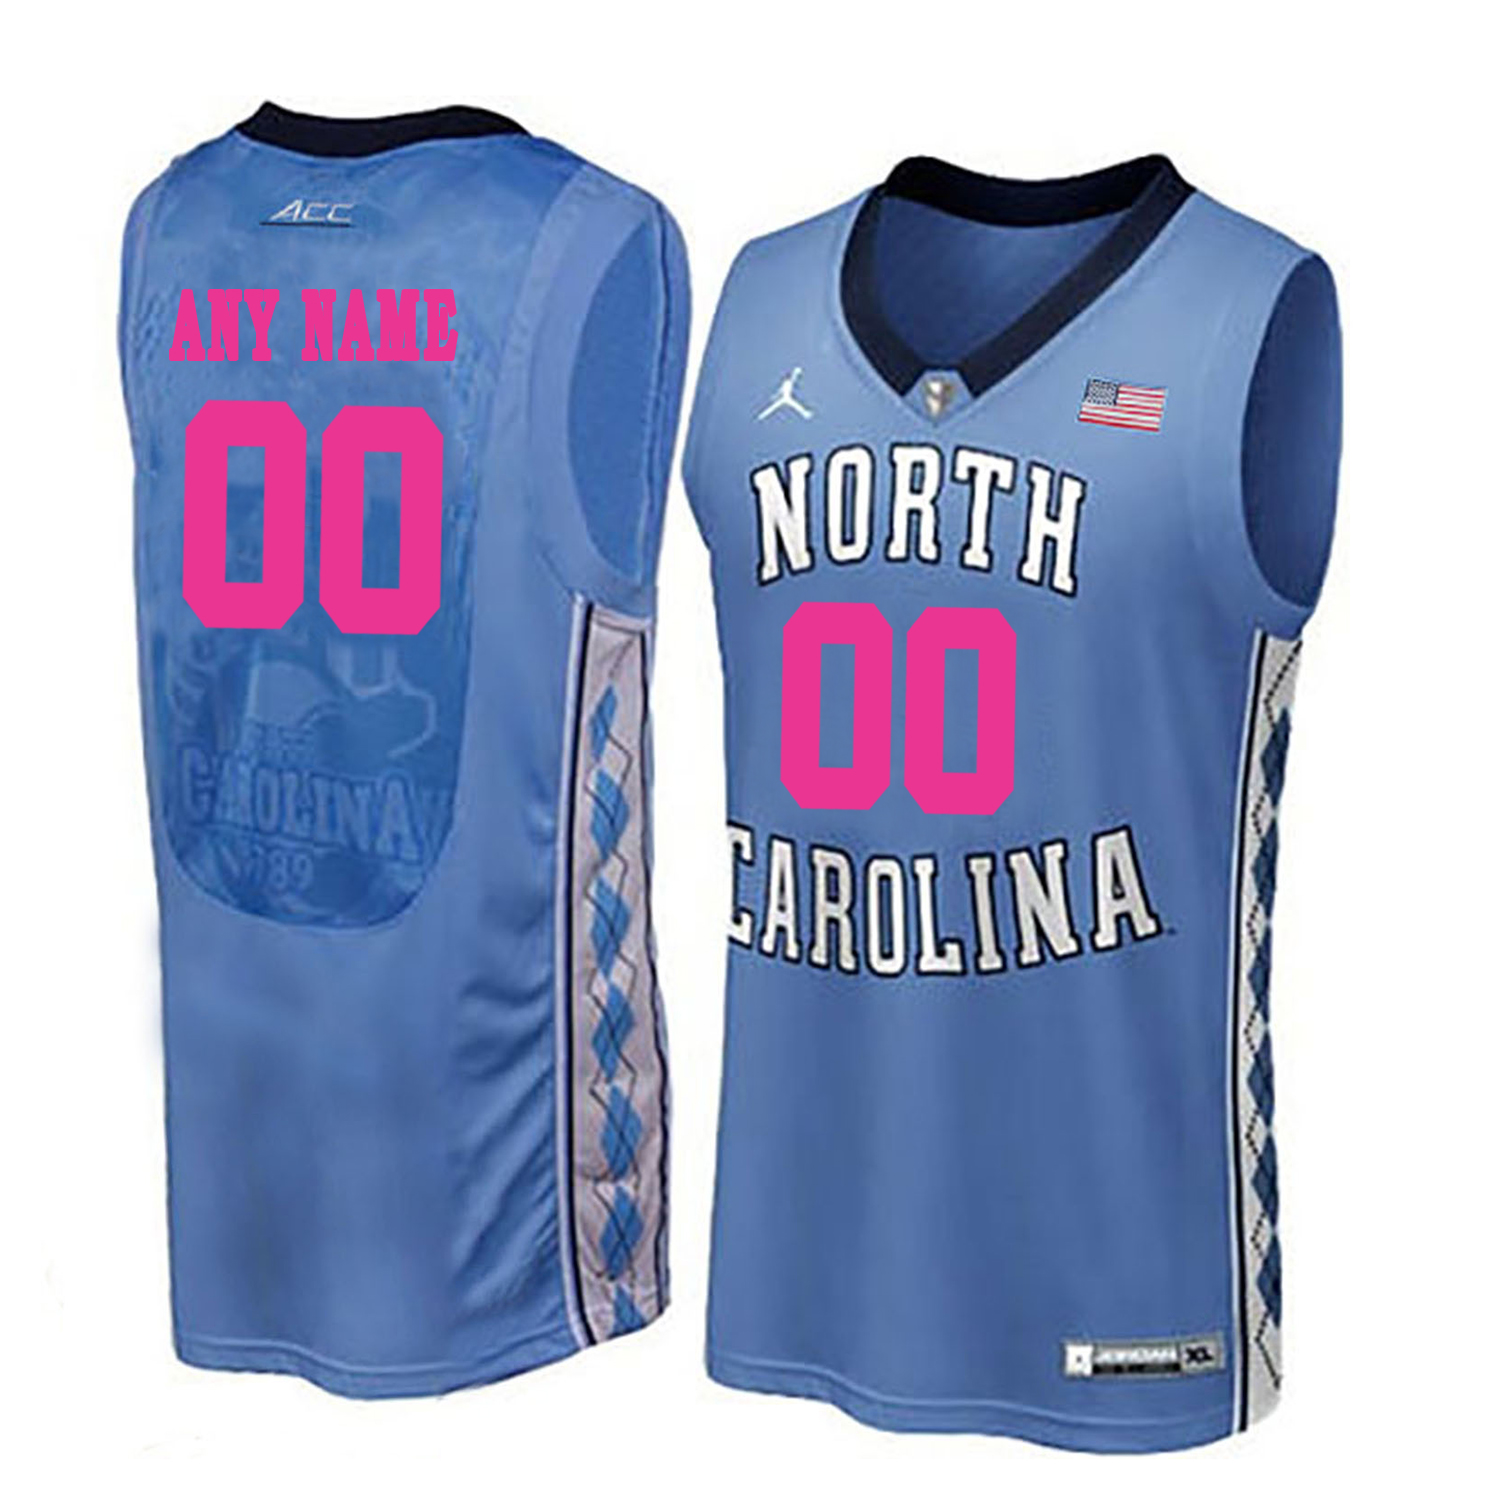 North Carolina Tar Heels Blue 2018 Breast Cancer Awareness Men's Customized College Basketball Jersey